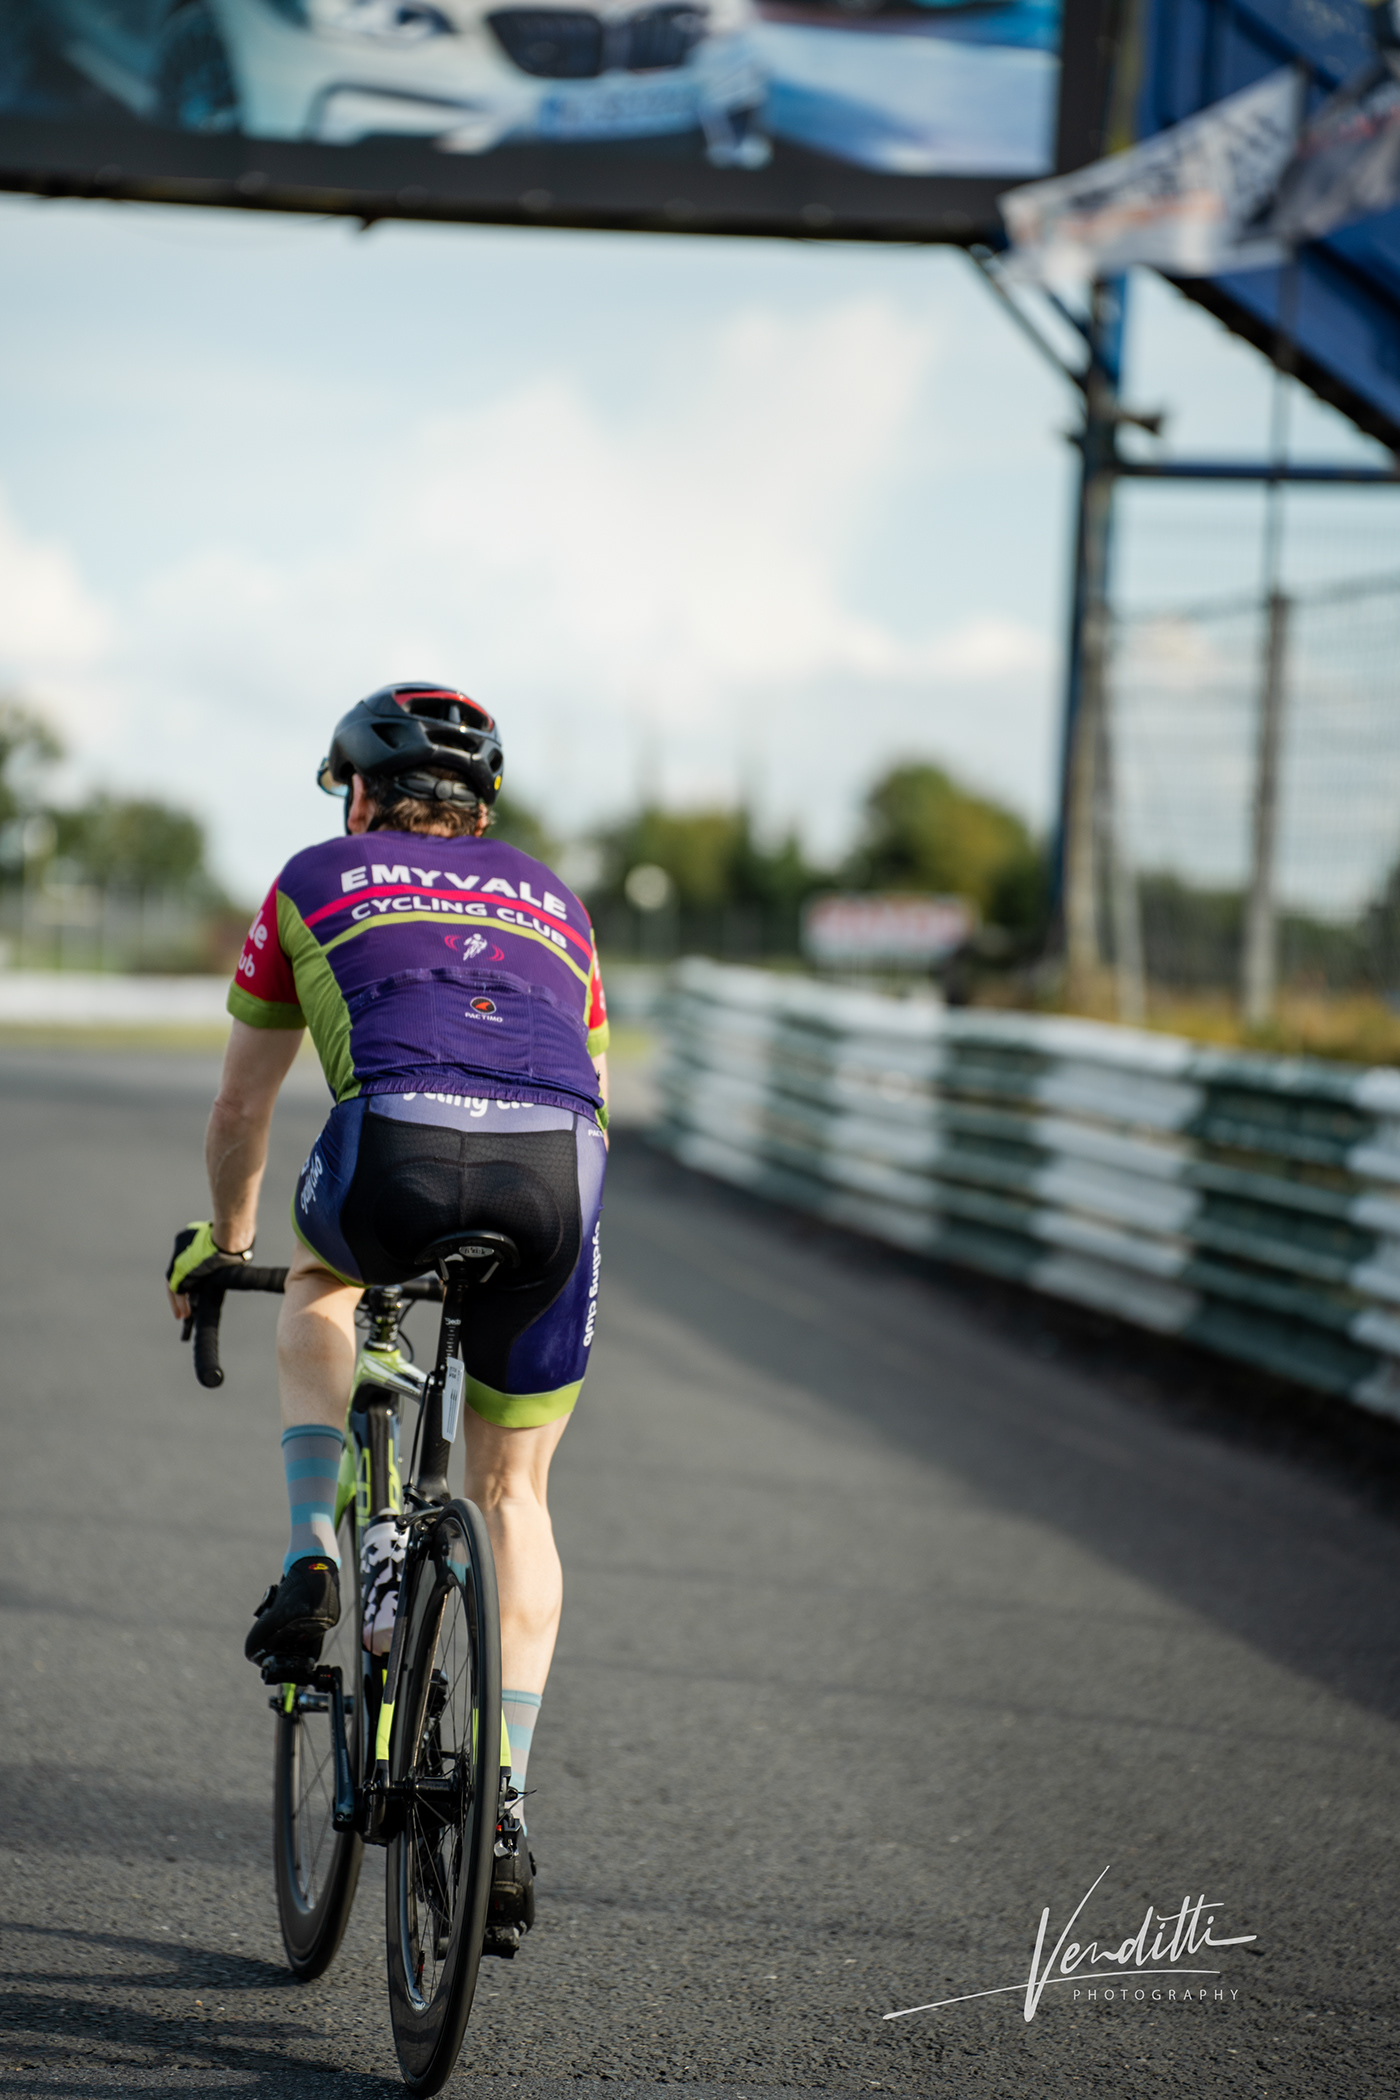 Cycling Bicycle sport cyclist cyclingphotography sports marketing roadbike